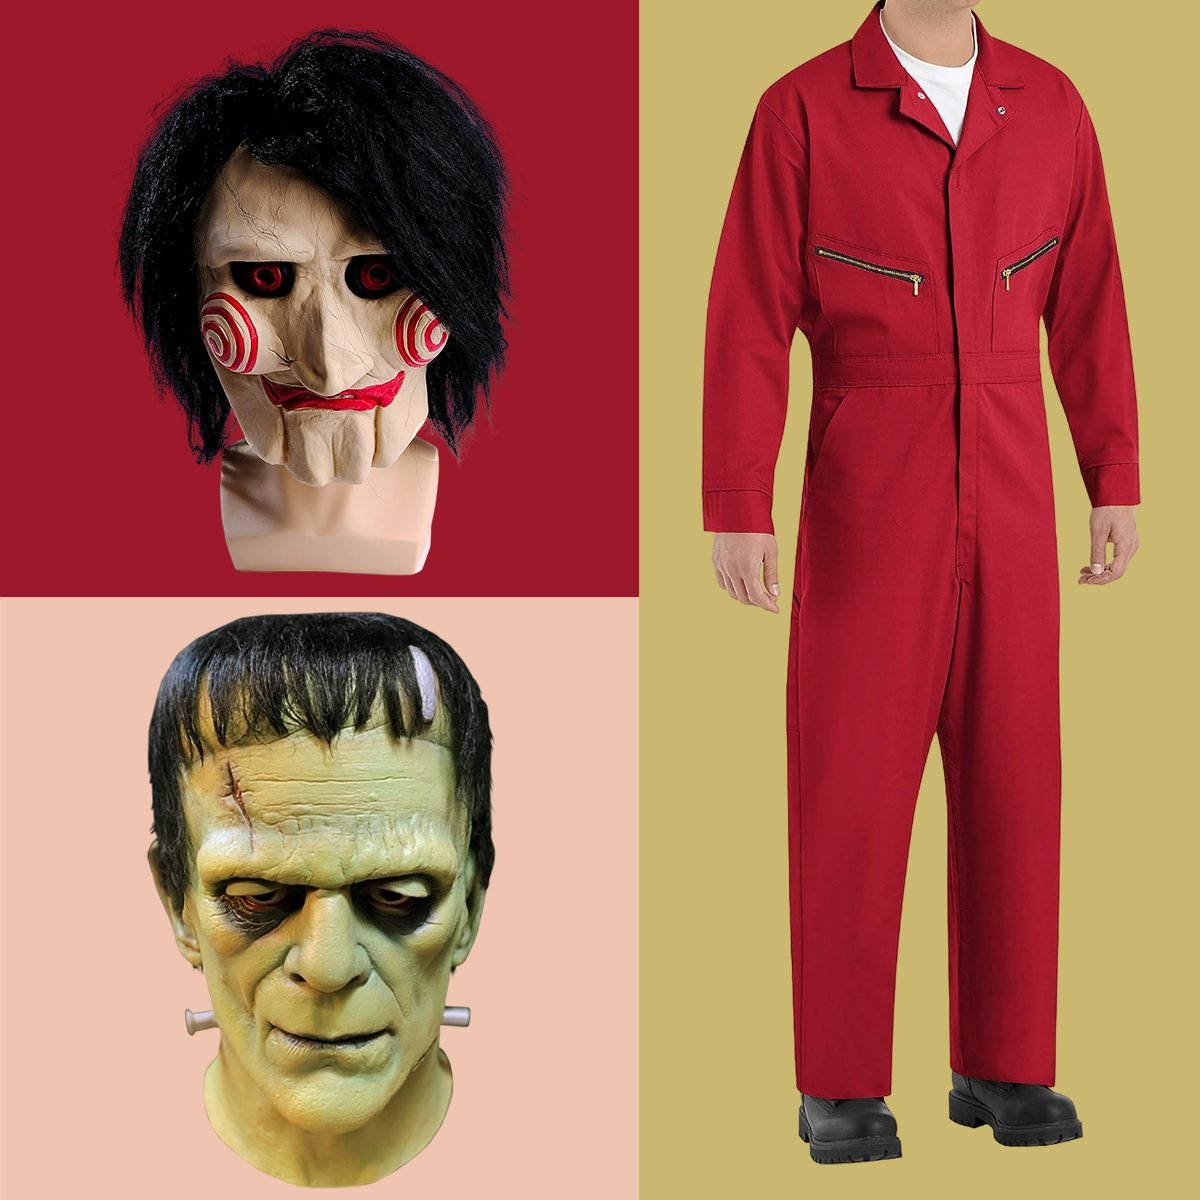 Halloween Zombie Costume for Boys - Kids Scary Halloween Costume